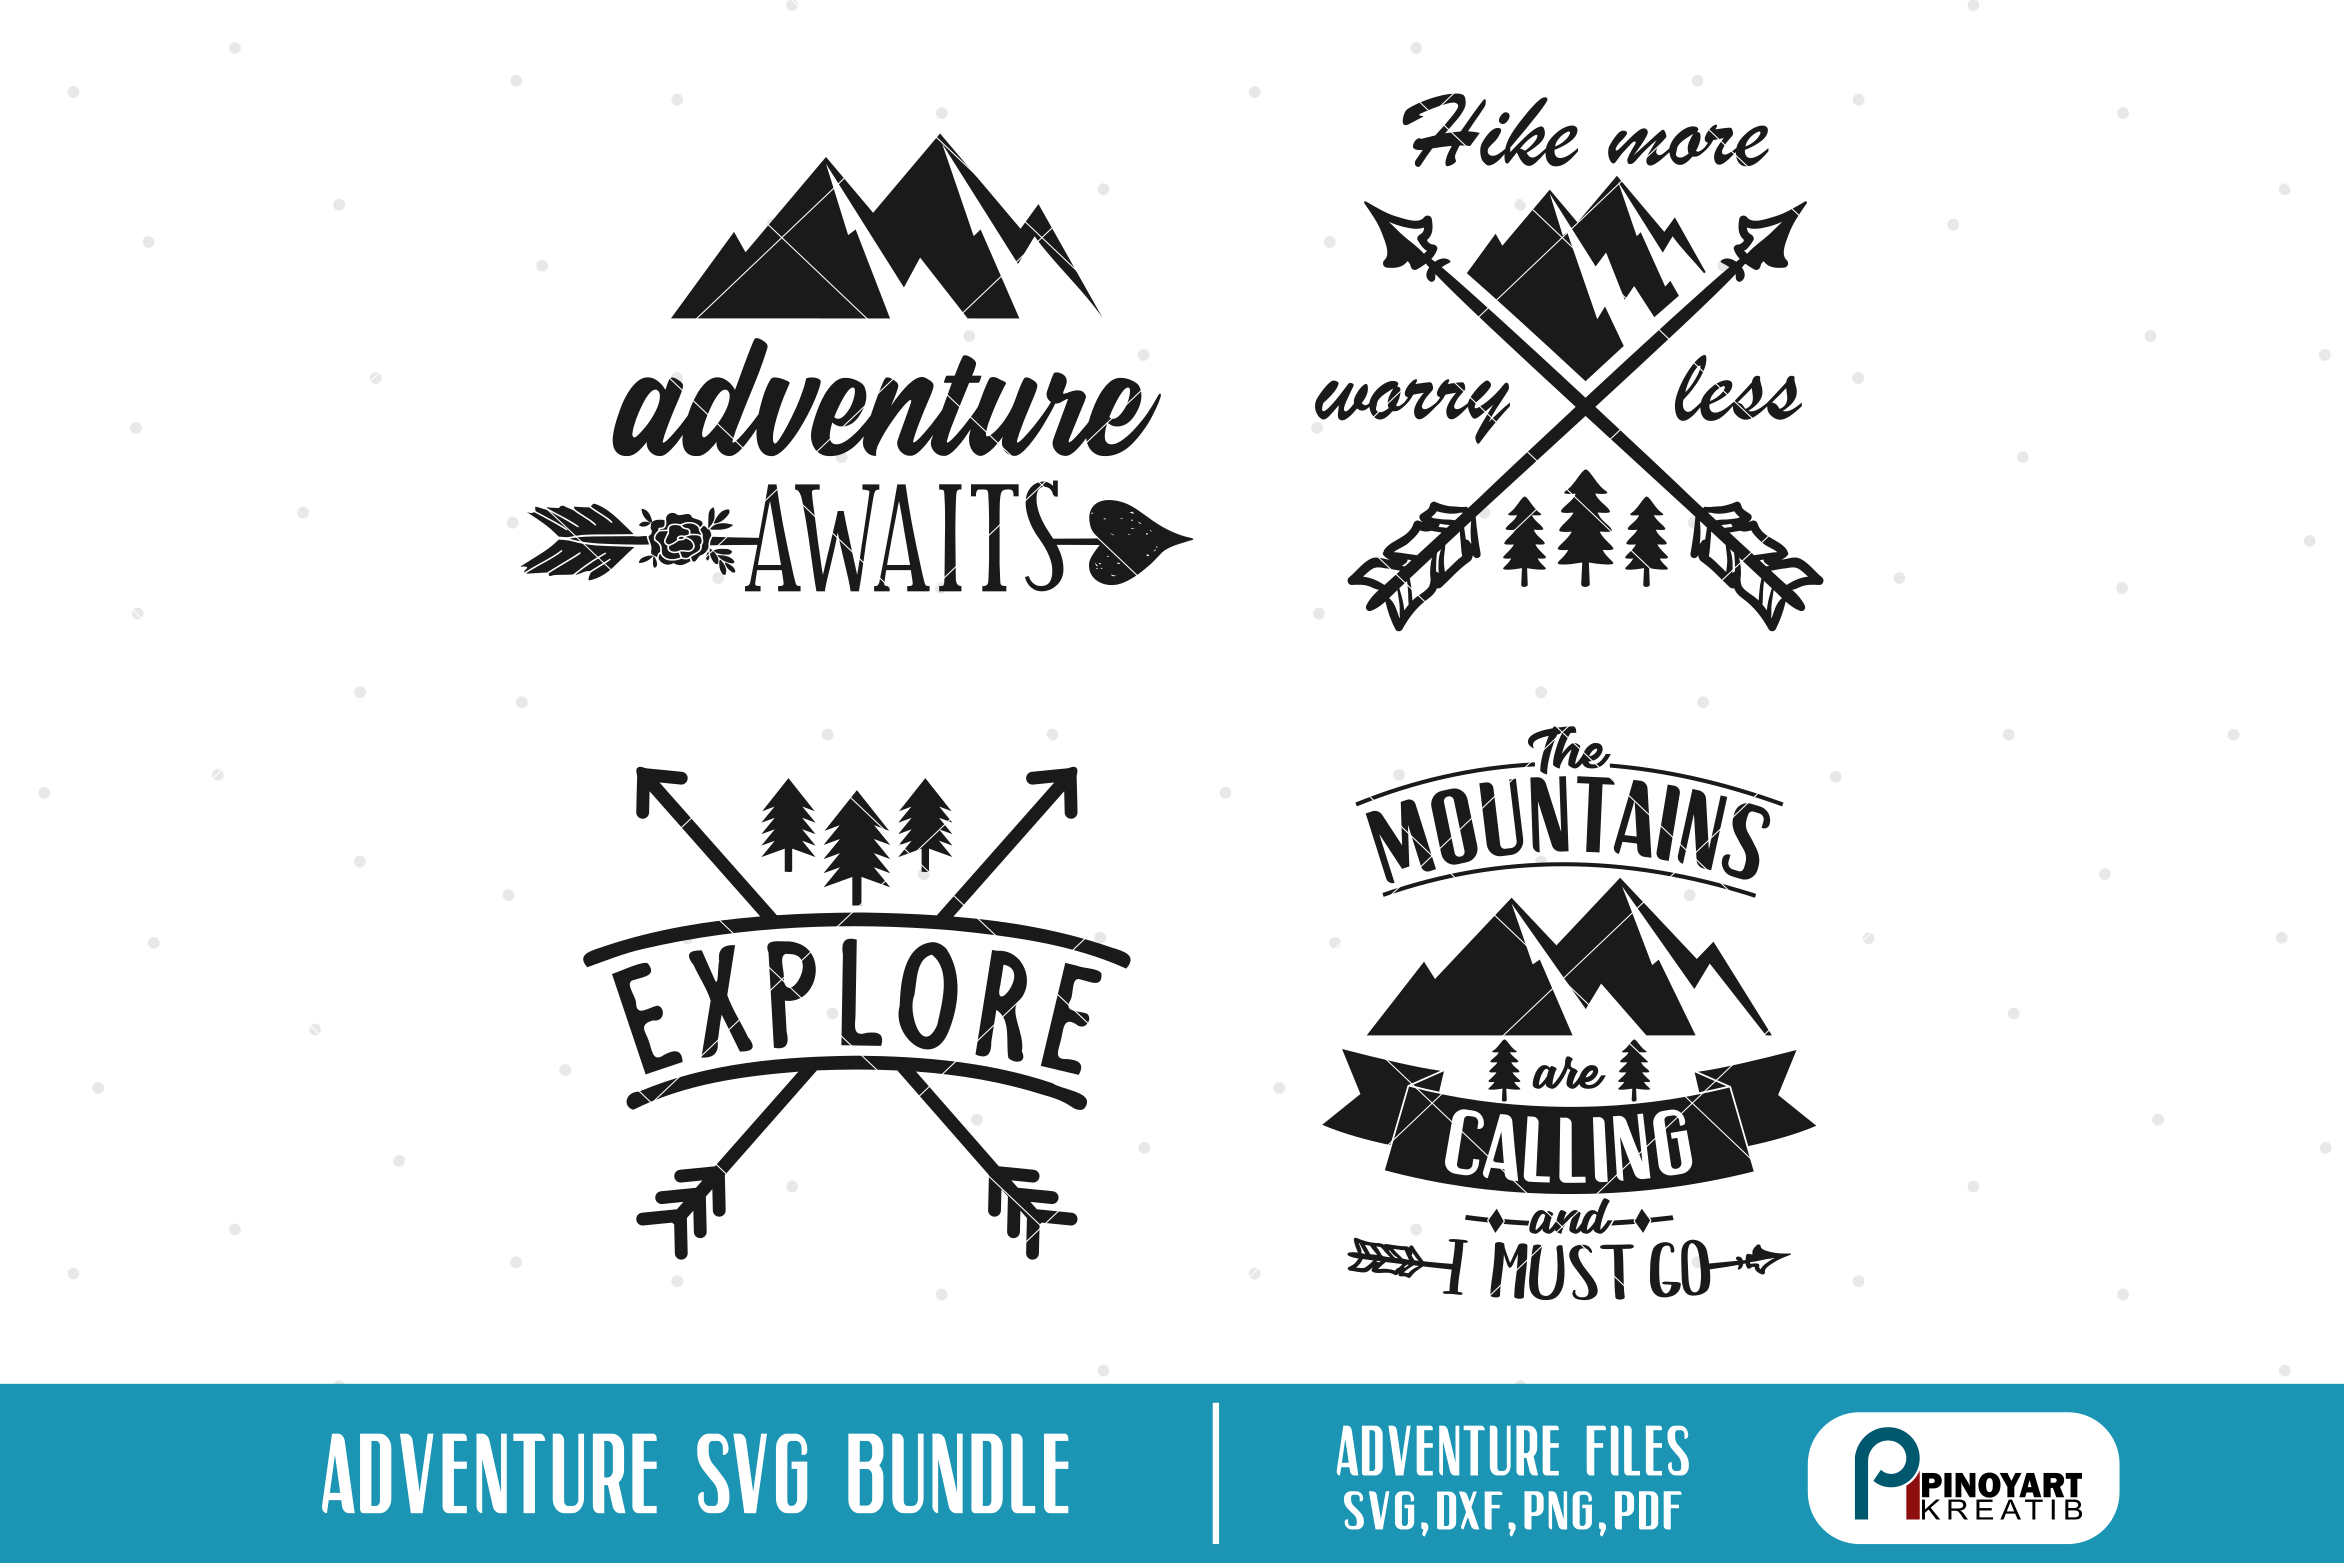 Download Adventure SVG Bundle - adventure vector files